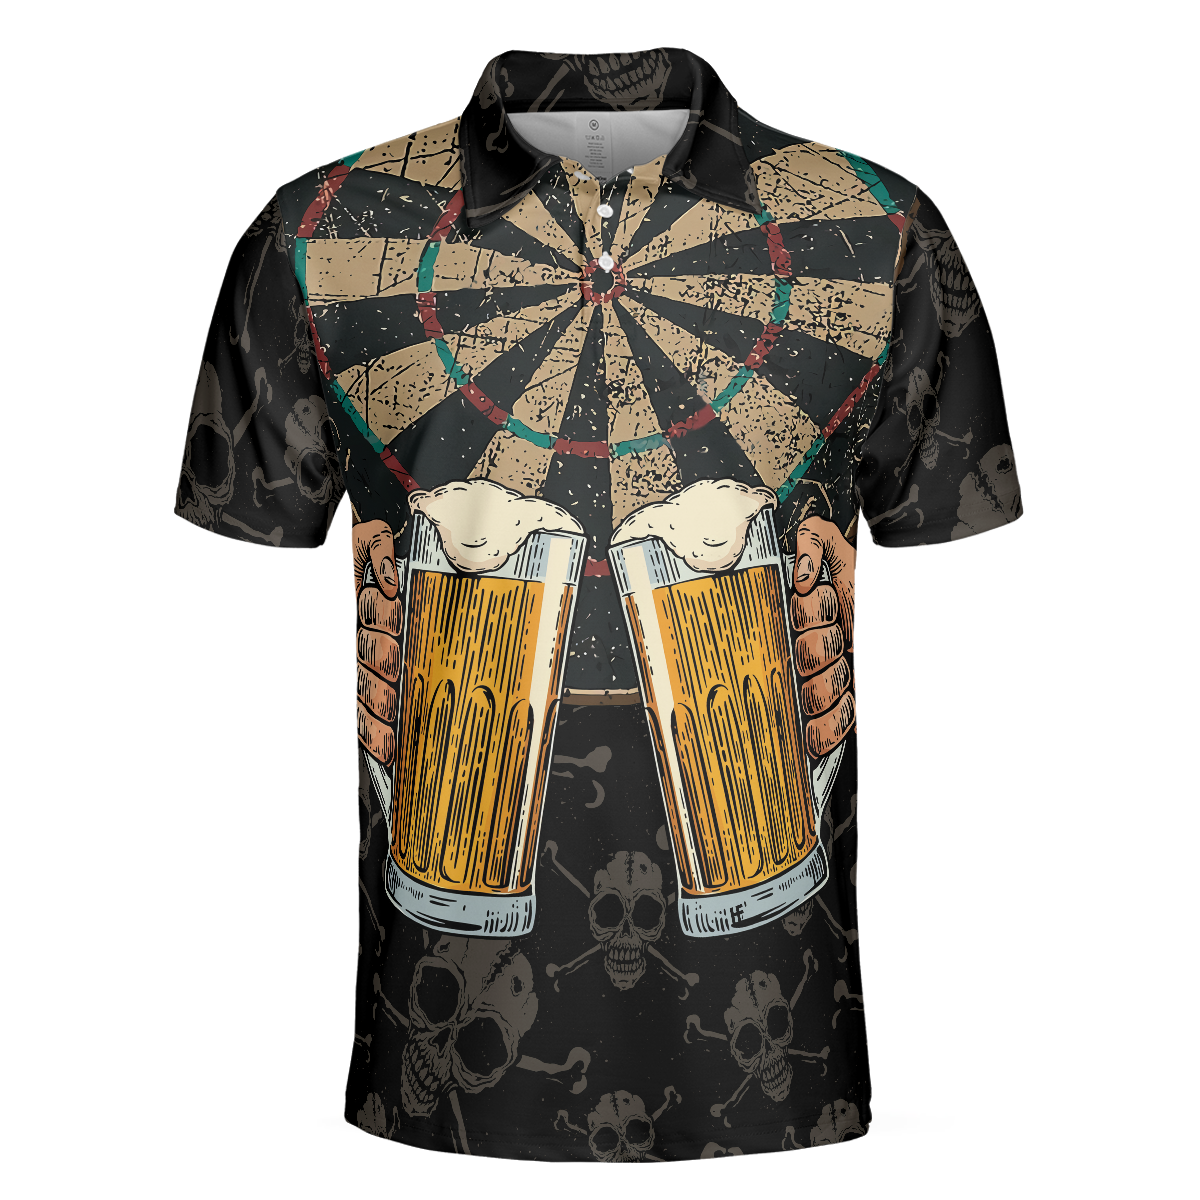 Dart Polo Shirt Dart Shirt For Men/ Best Gift For Dart Player/ Darts Polo Shirt For Hot Weather